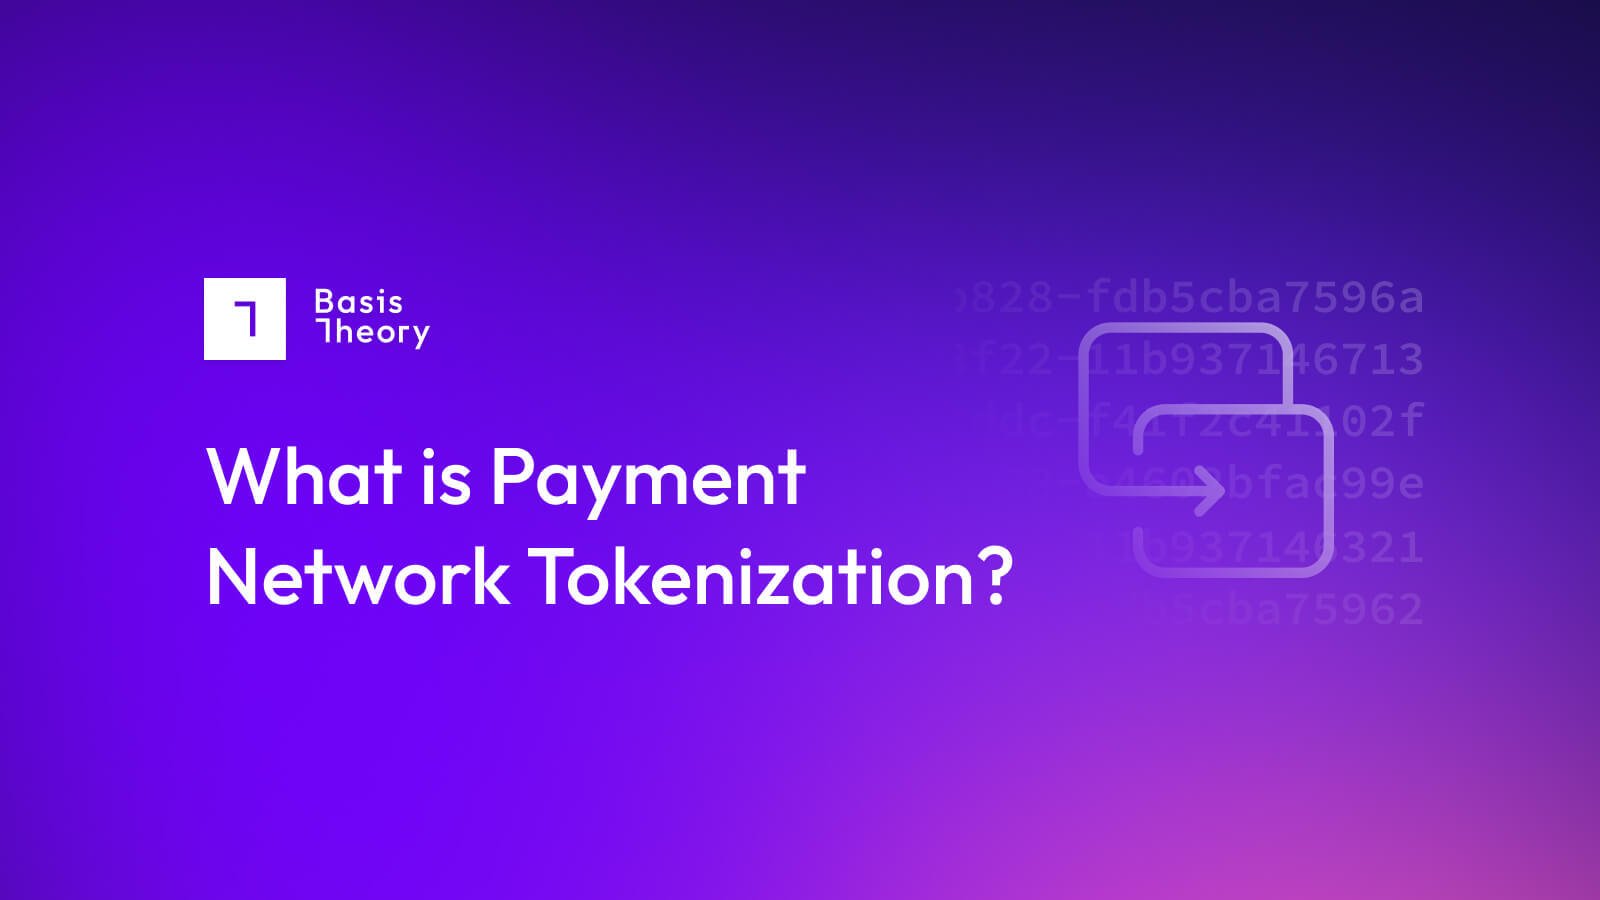 Payment network tokenization